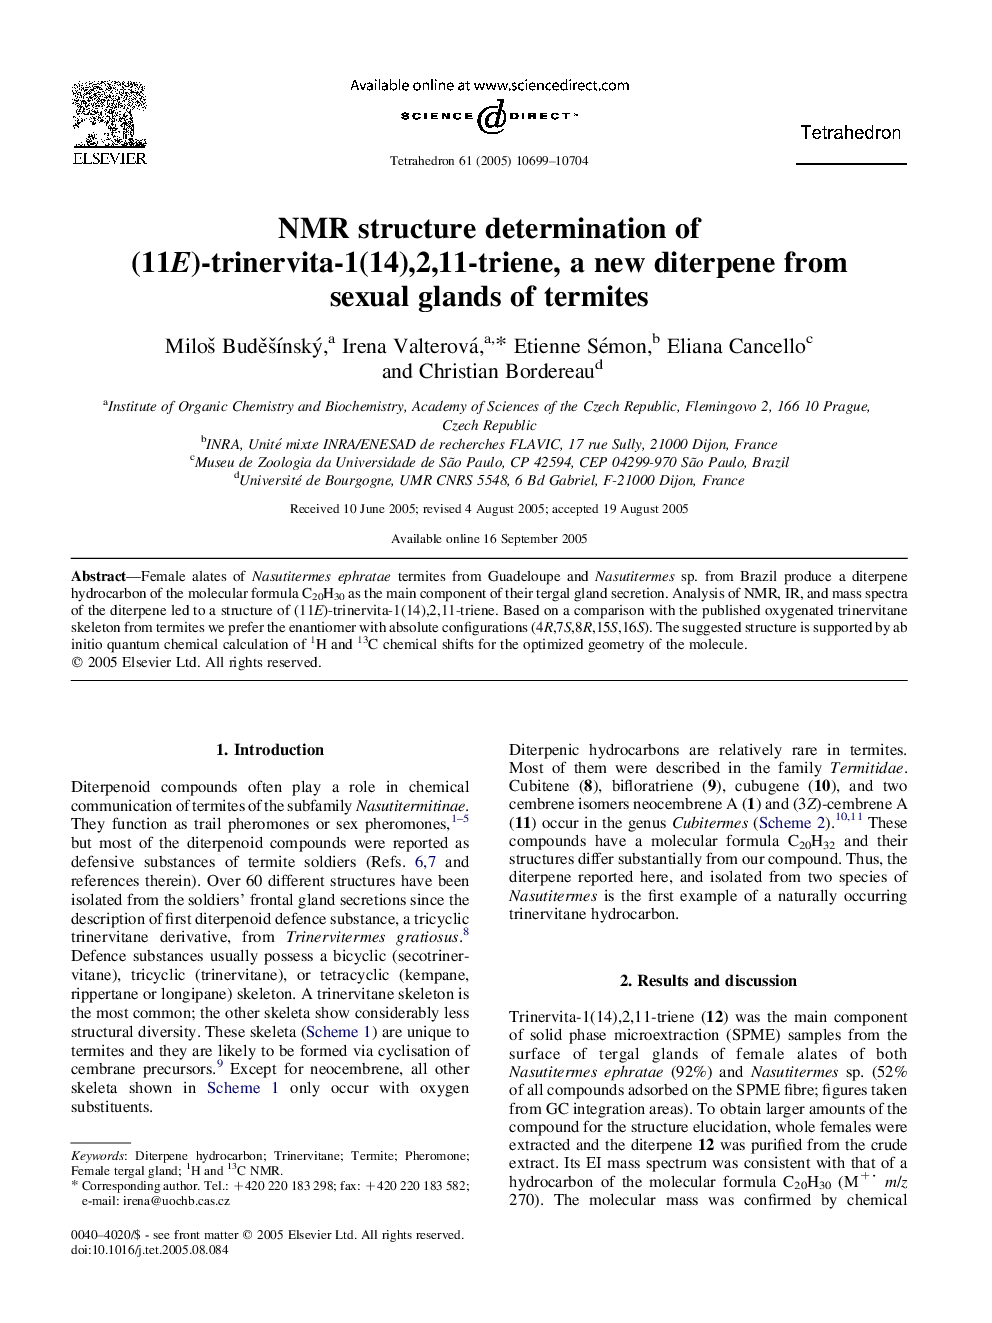 NMR structure determination of (11E)-trinervita-1(14),2,11-triene, a new diterpene from sexual glands of termites